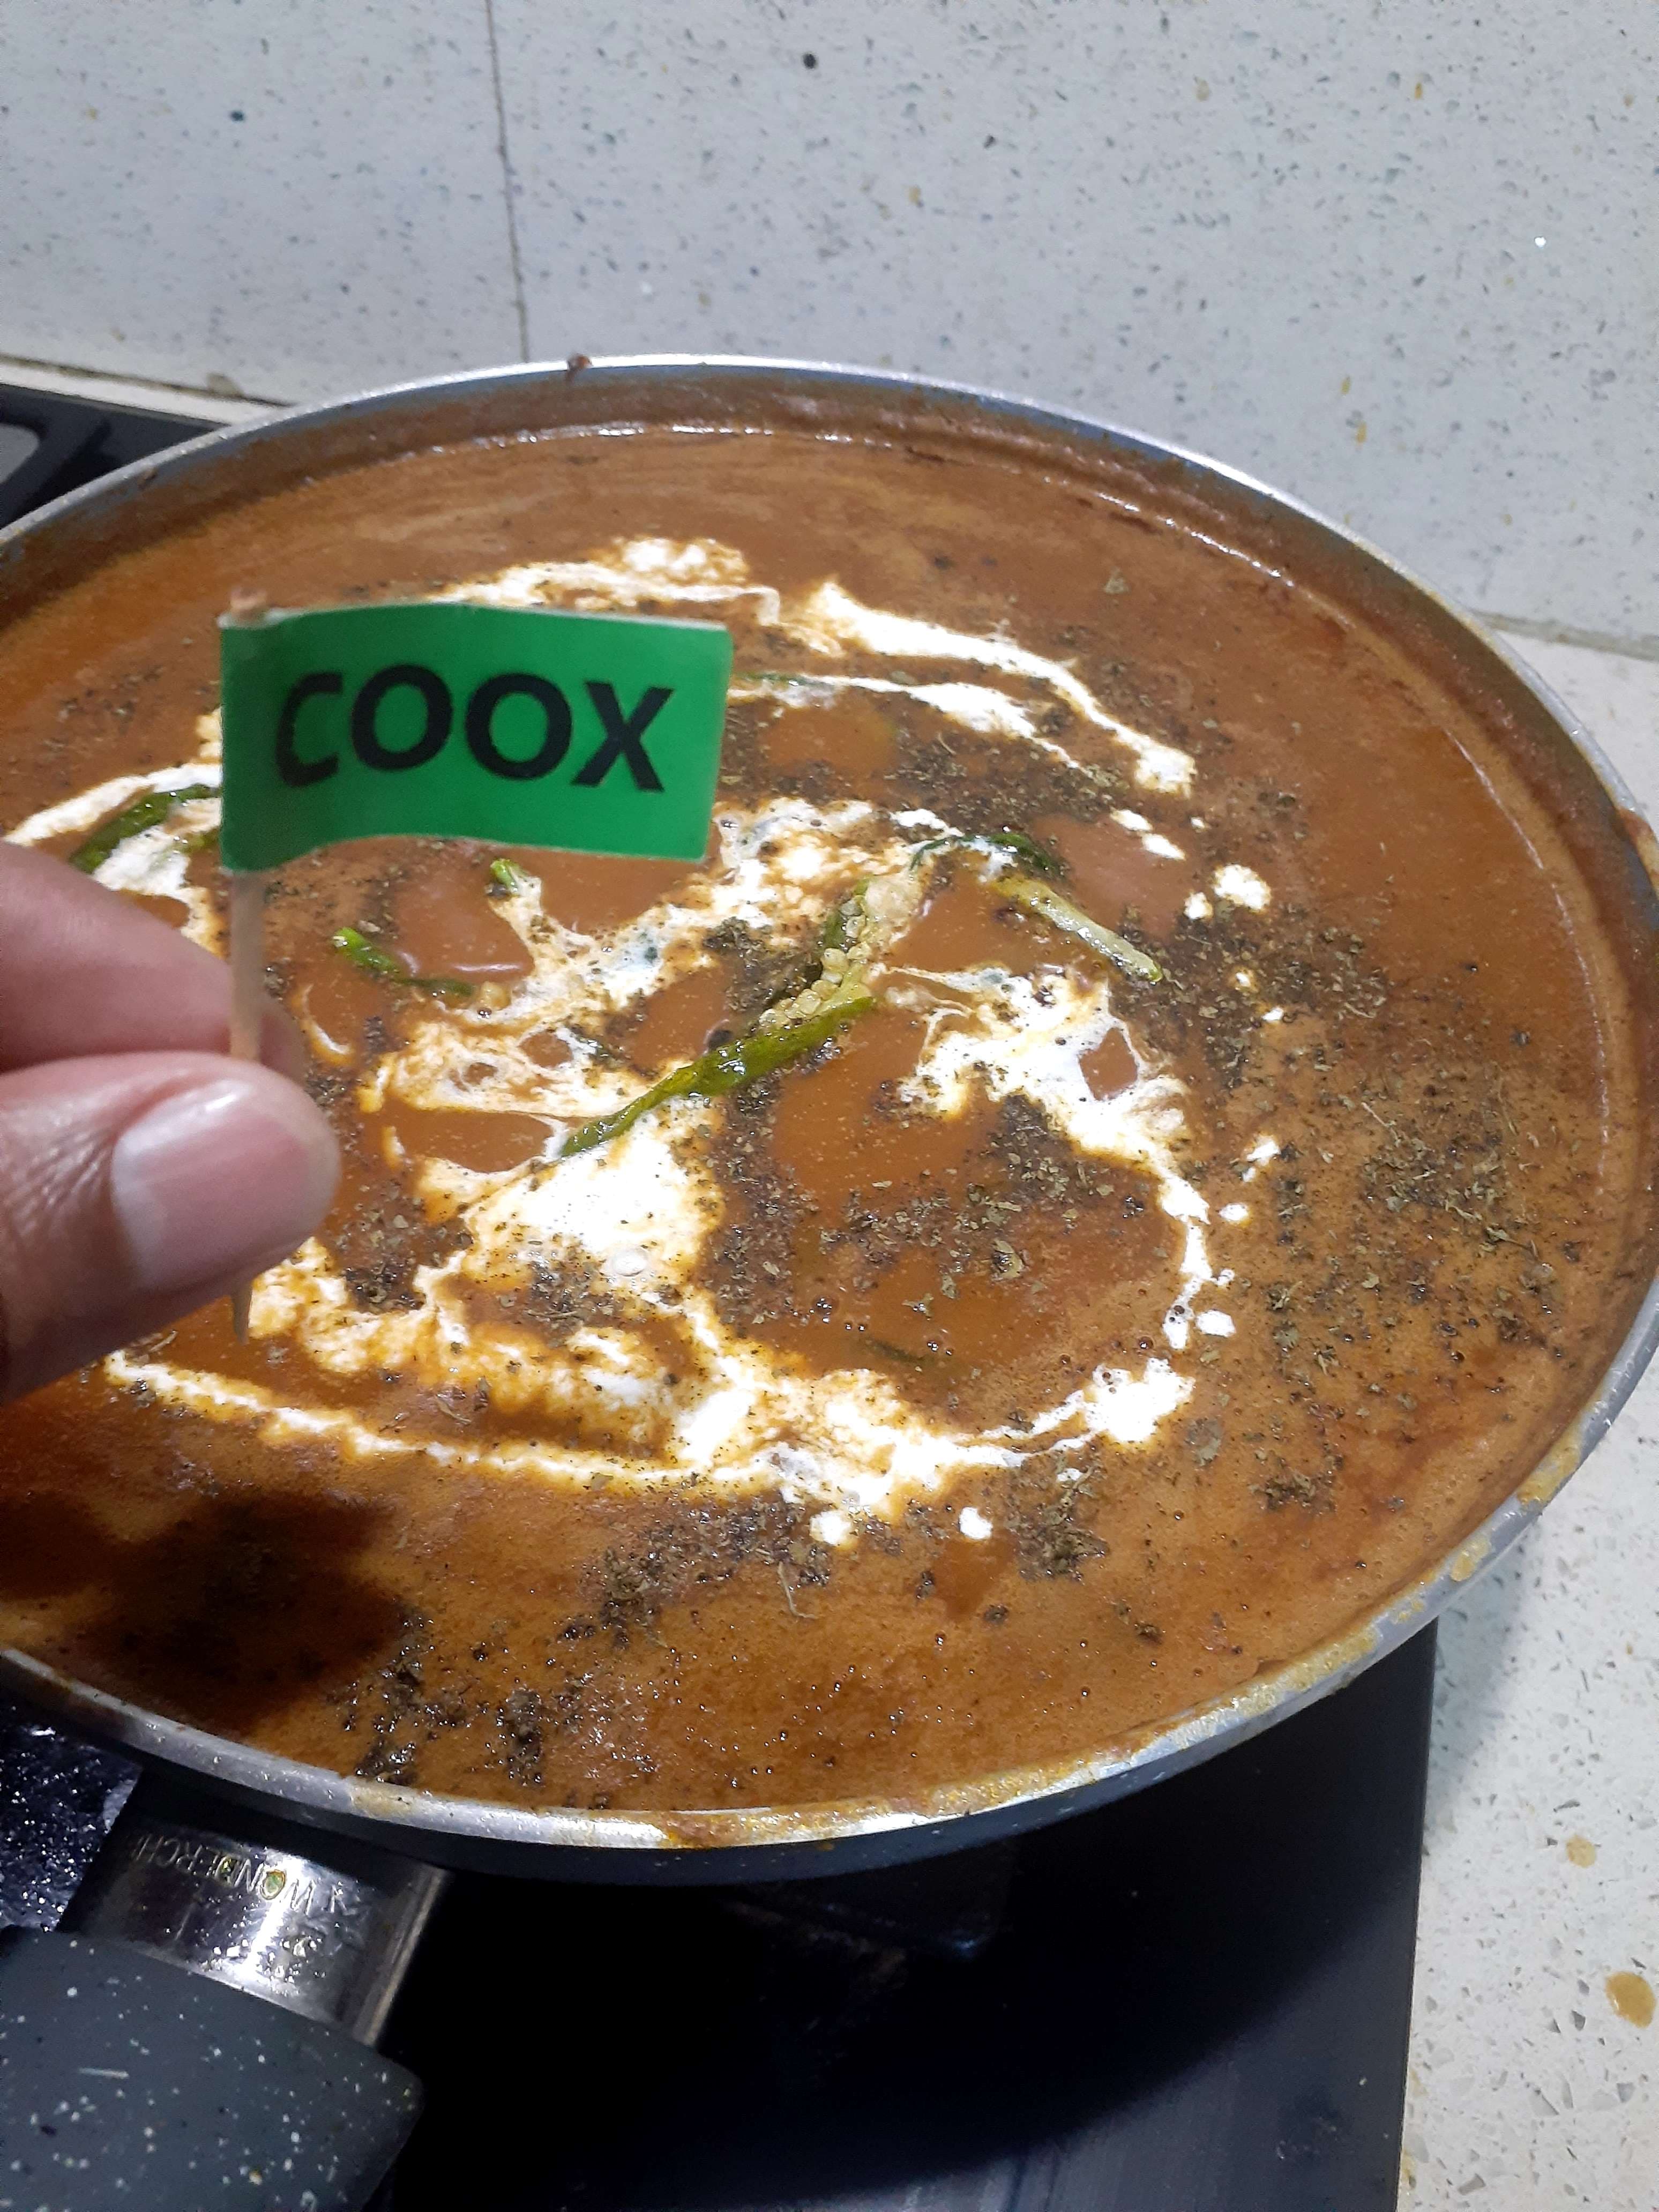 Delicious Rajma Masala prepared by COOX